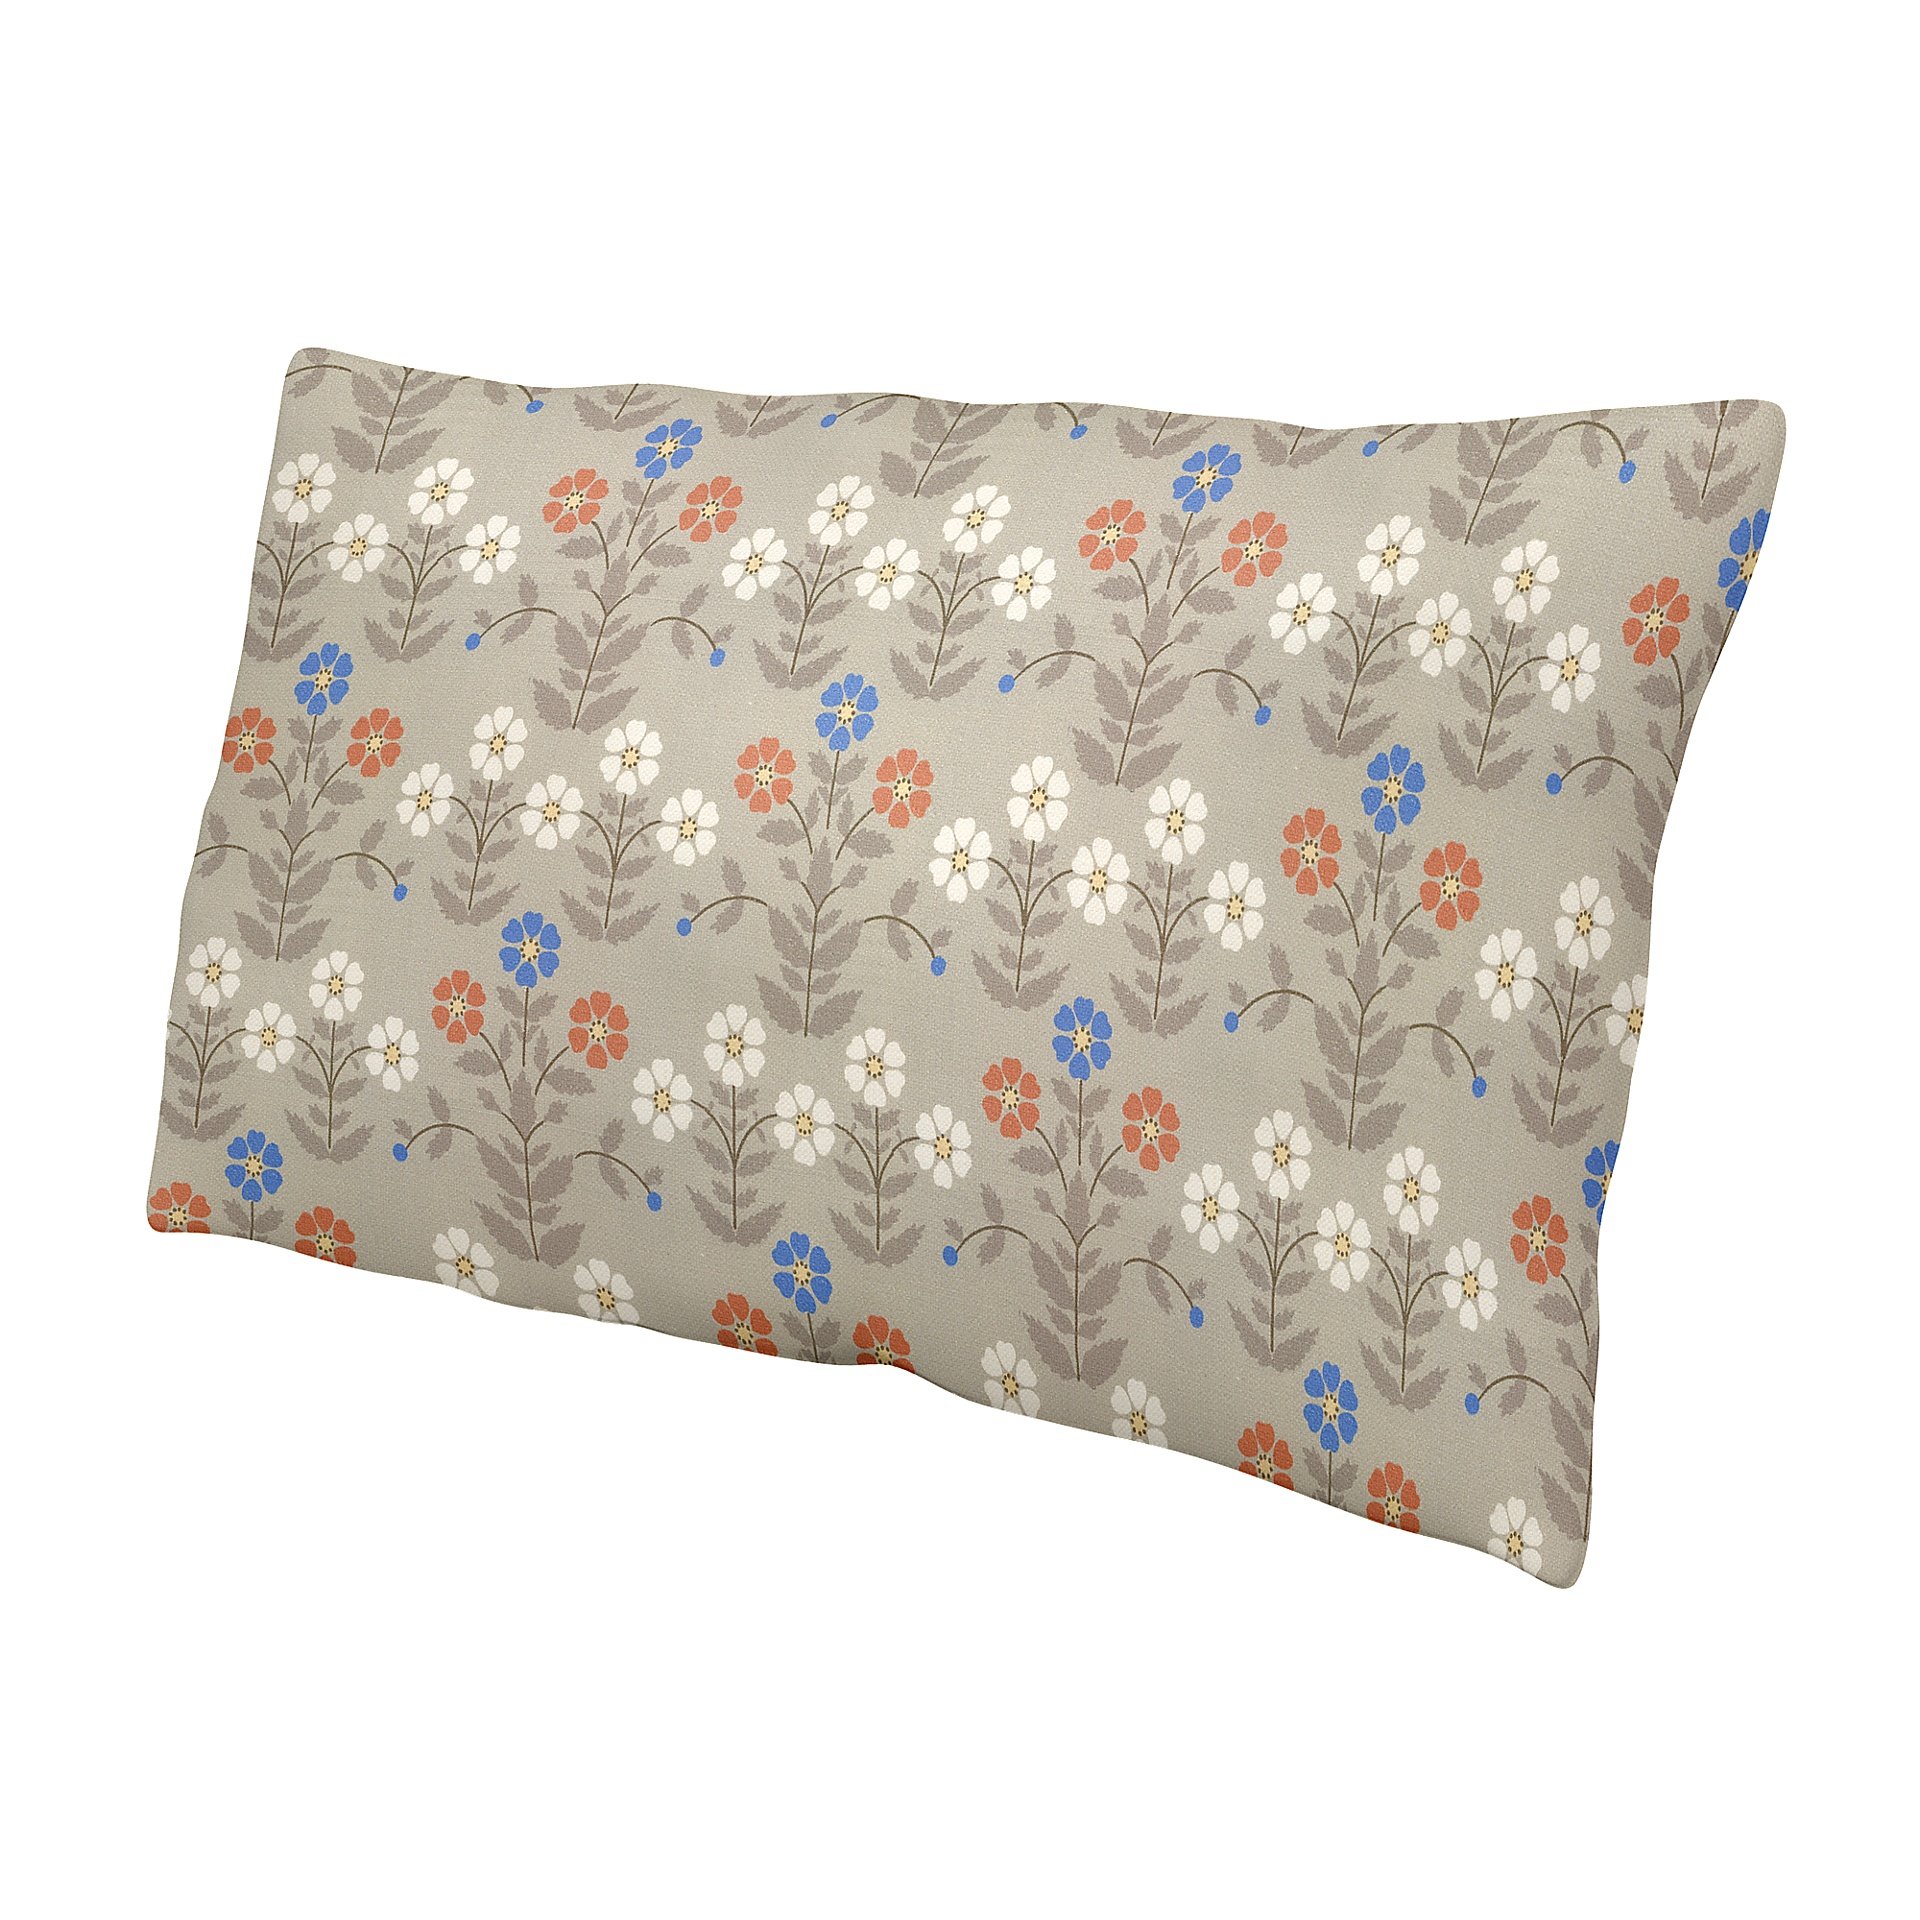 IKEA - Cushion Cover Ektorp 40x70 cm, Sippor Blue/Orange, BEMZ x BORASTAPETER COLLECTION - Bemz